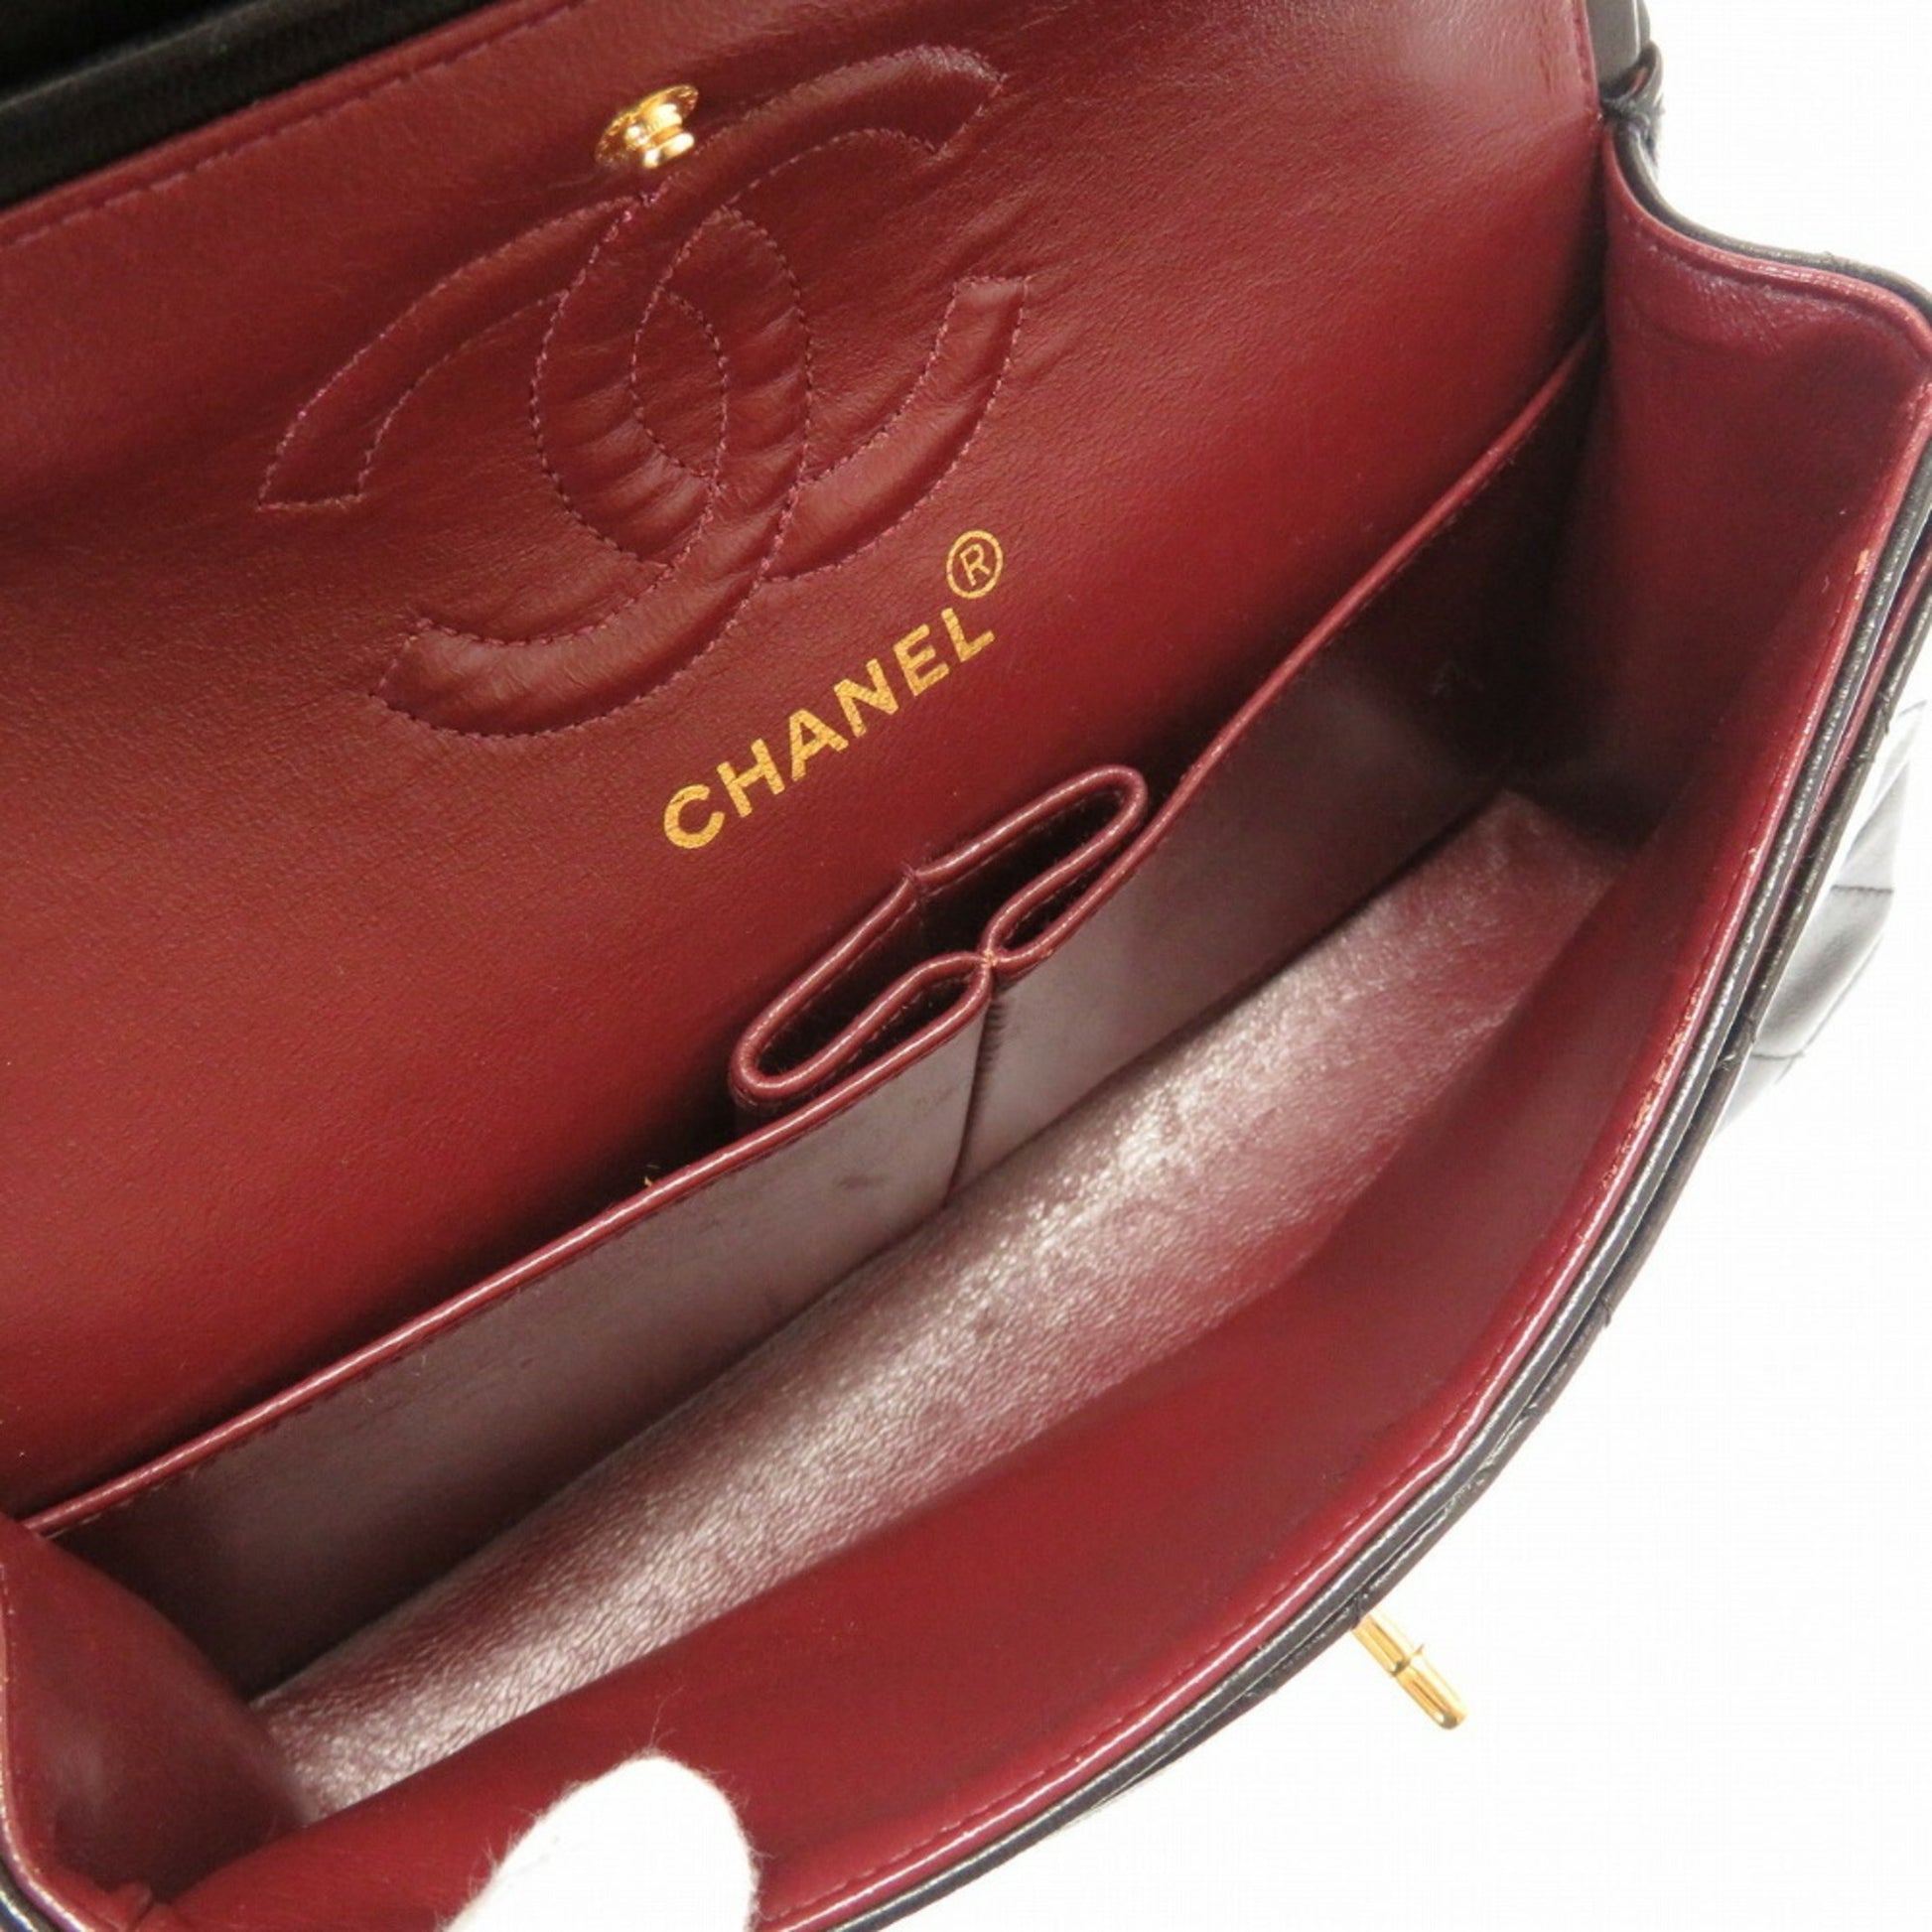 CHANEL, Bags, Chanel Metallic Cc Flap Bag Medium